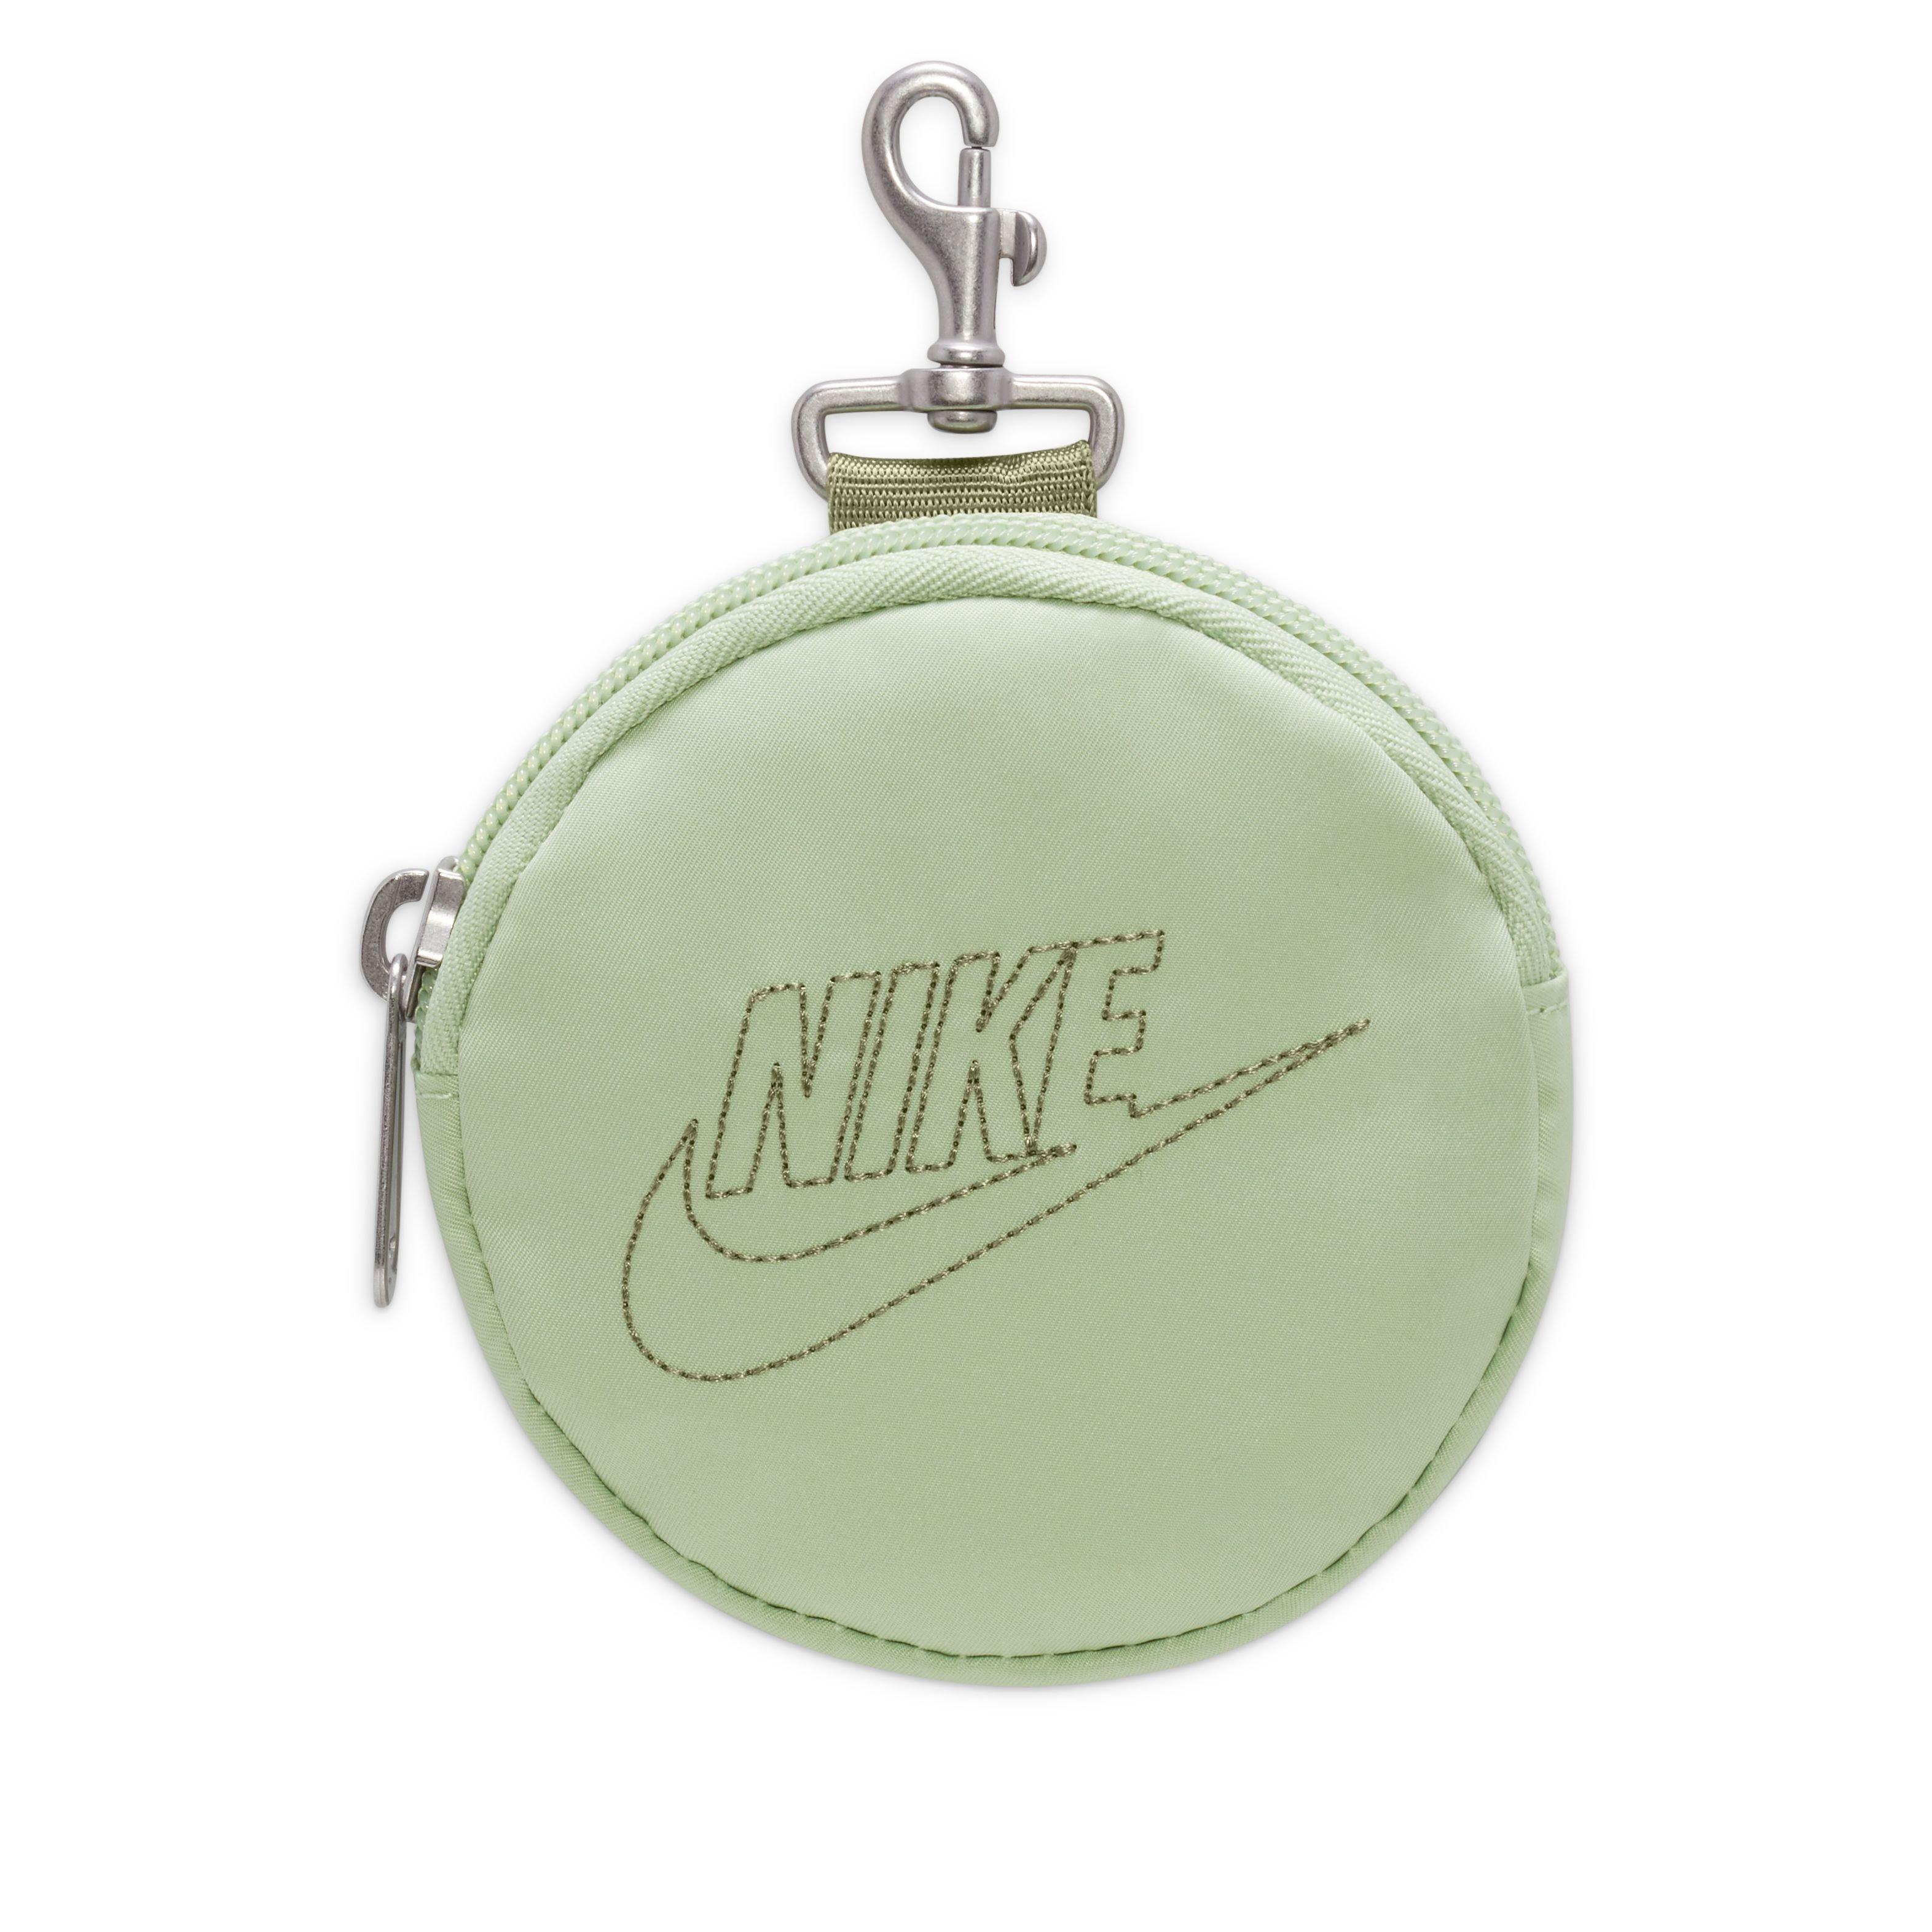 Nike Sportswear Futura Luxe Mini Backpack-Olive